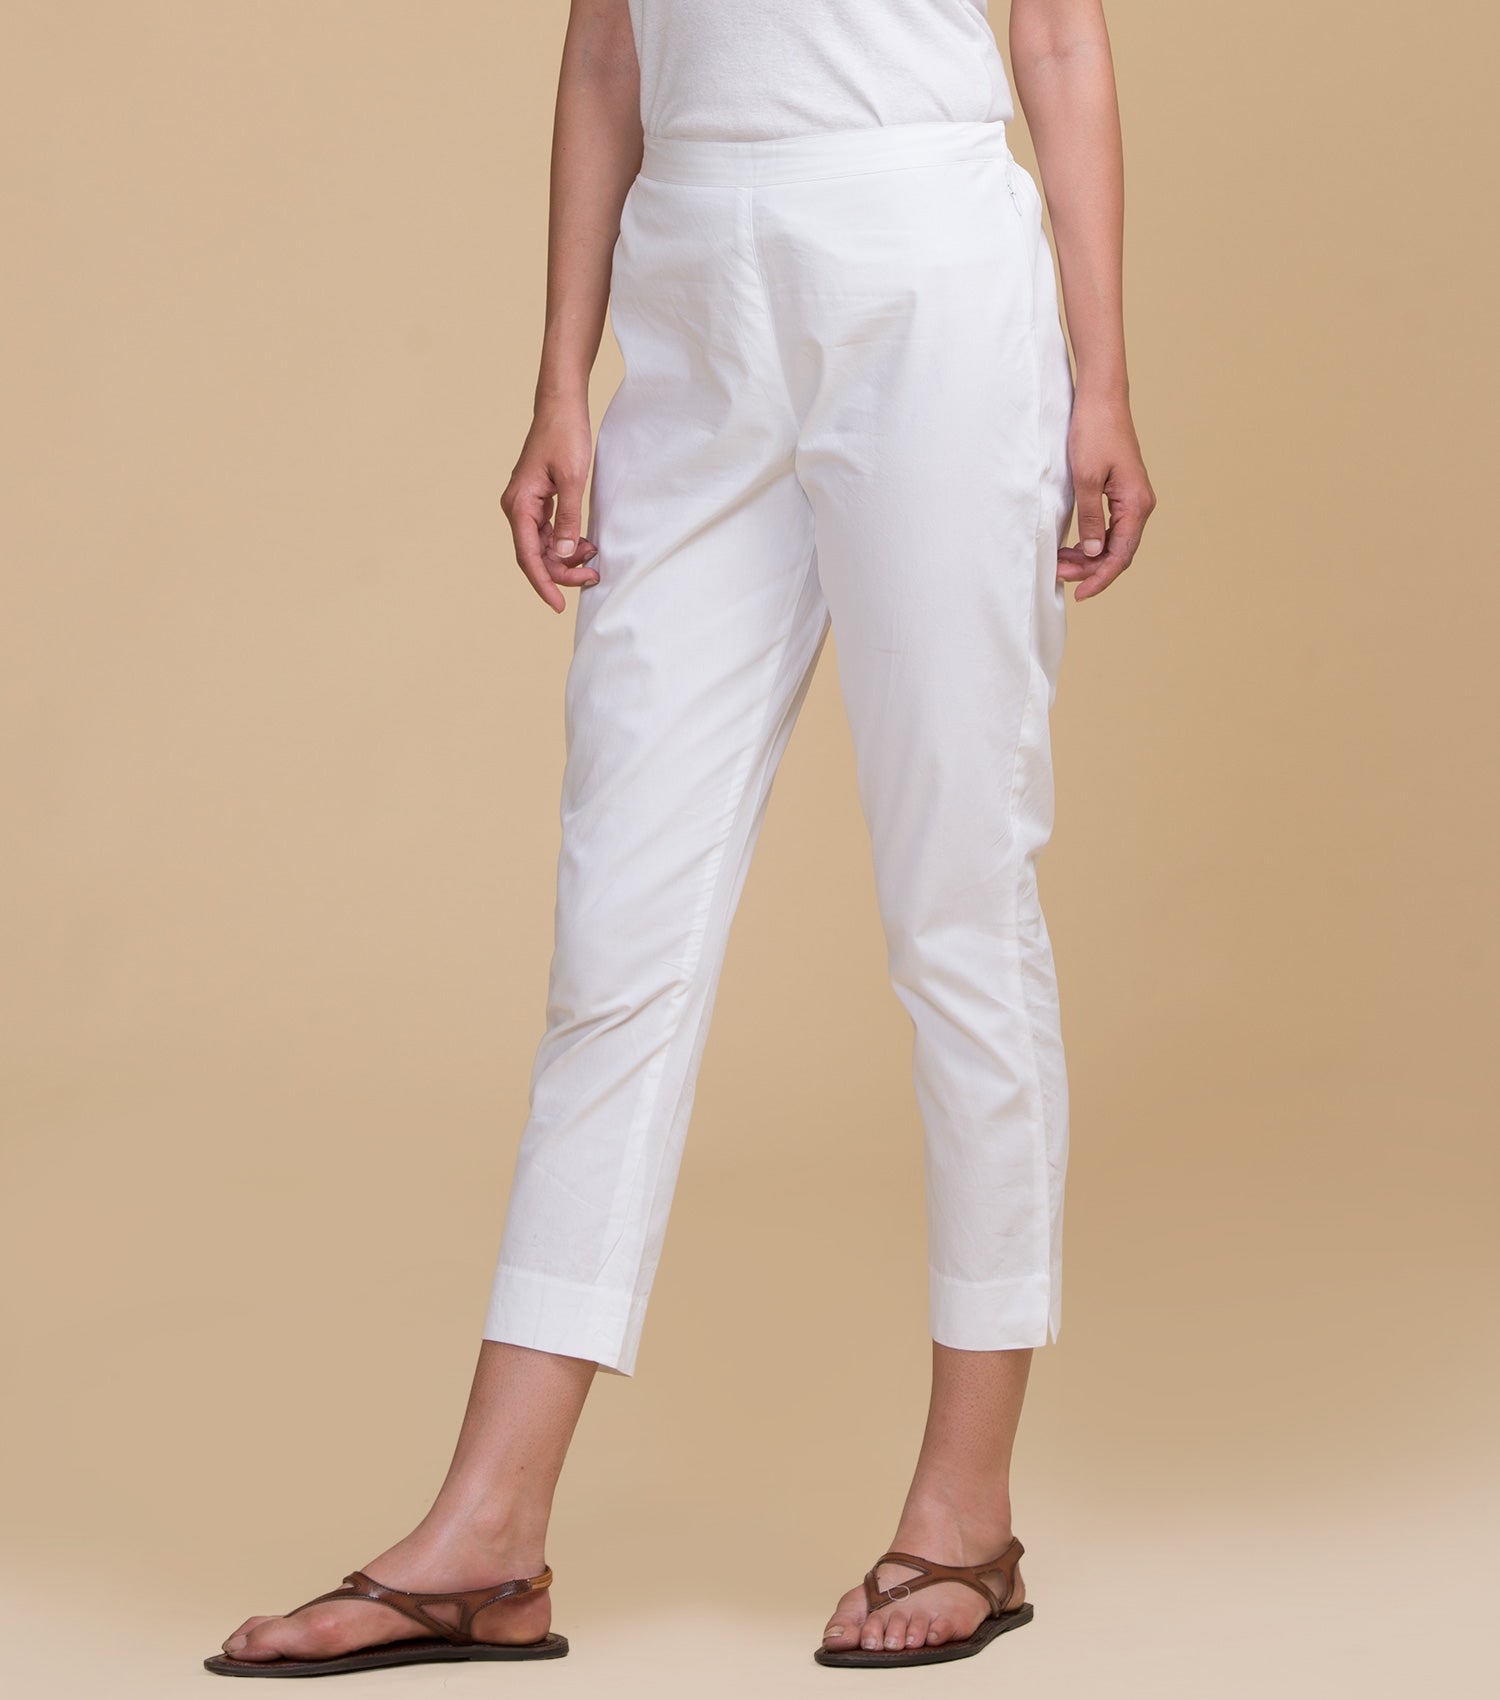 White solid cotton pants